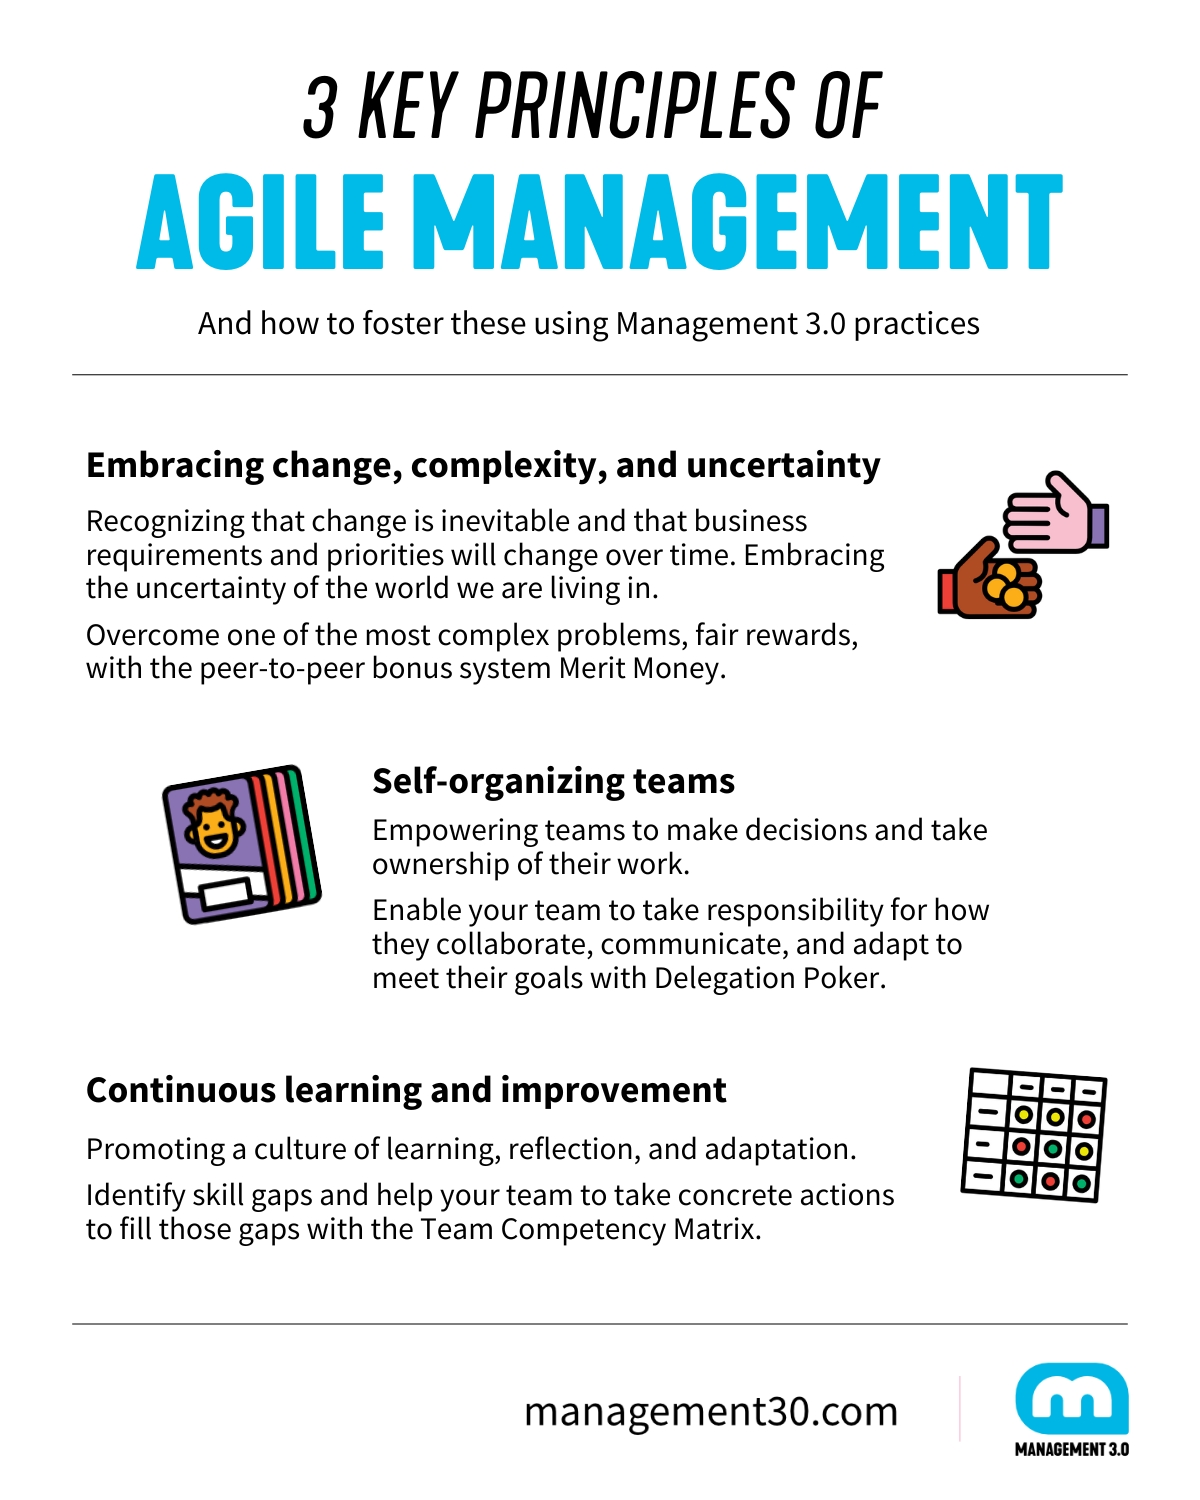 Three key principles of Agile management